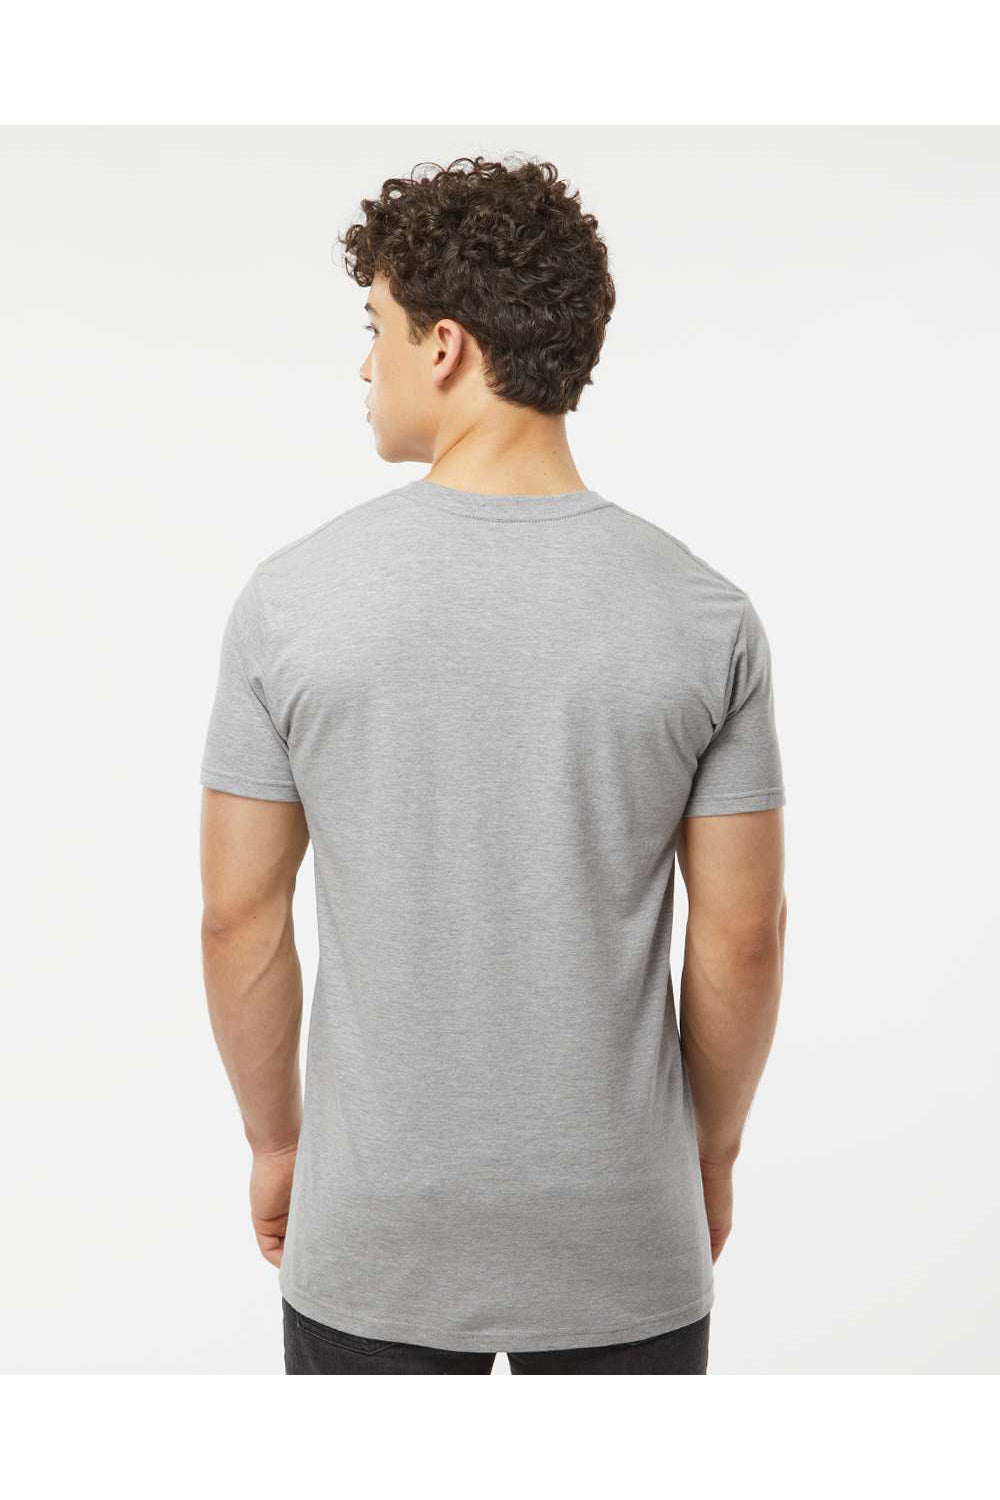 Tultex 293 Mens Jersey Short Sleeve Crewneck T-Shirt w/ Pocket Heather Grey Model Back